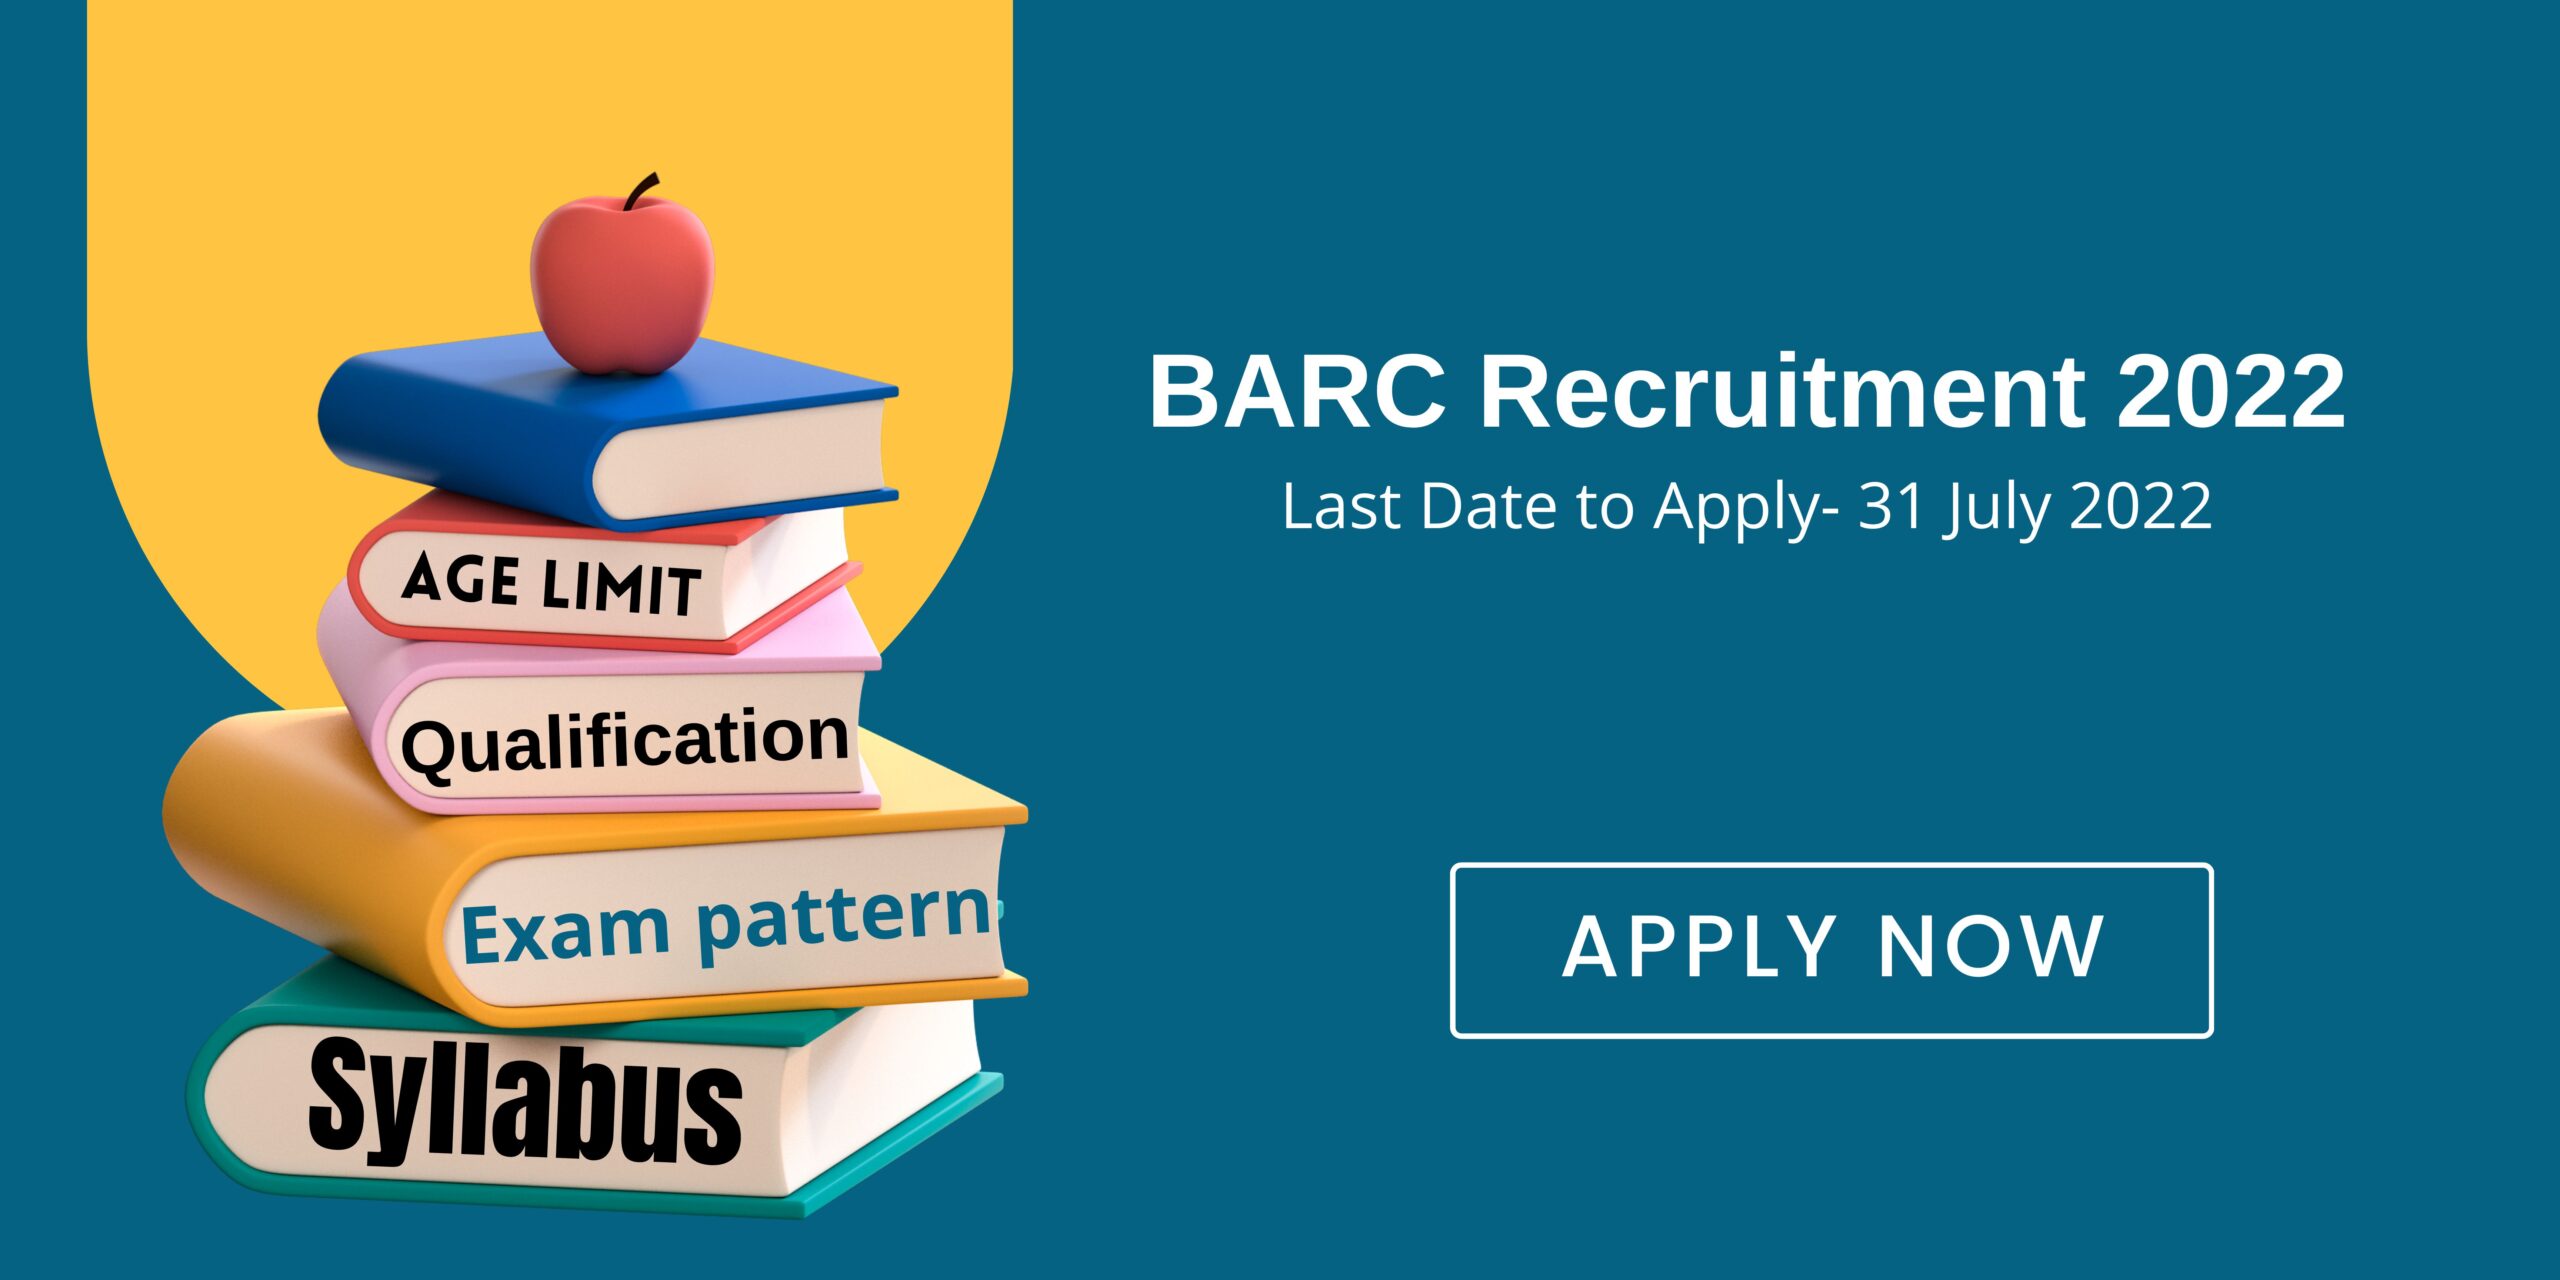 BARC Recruitment 2022